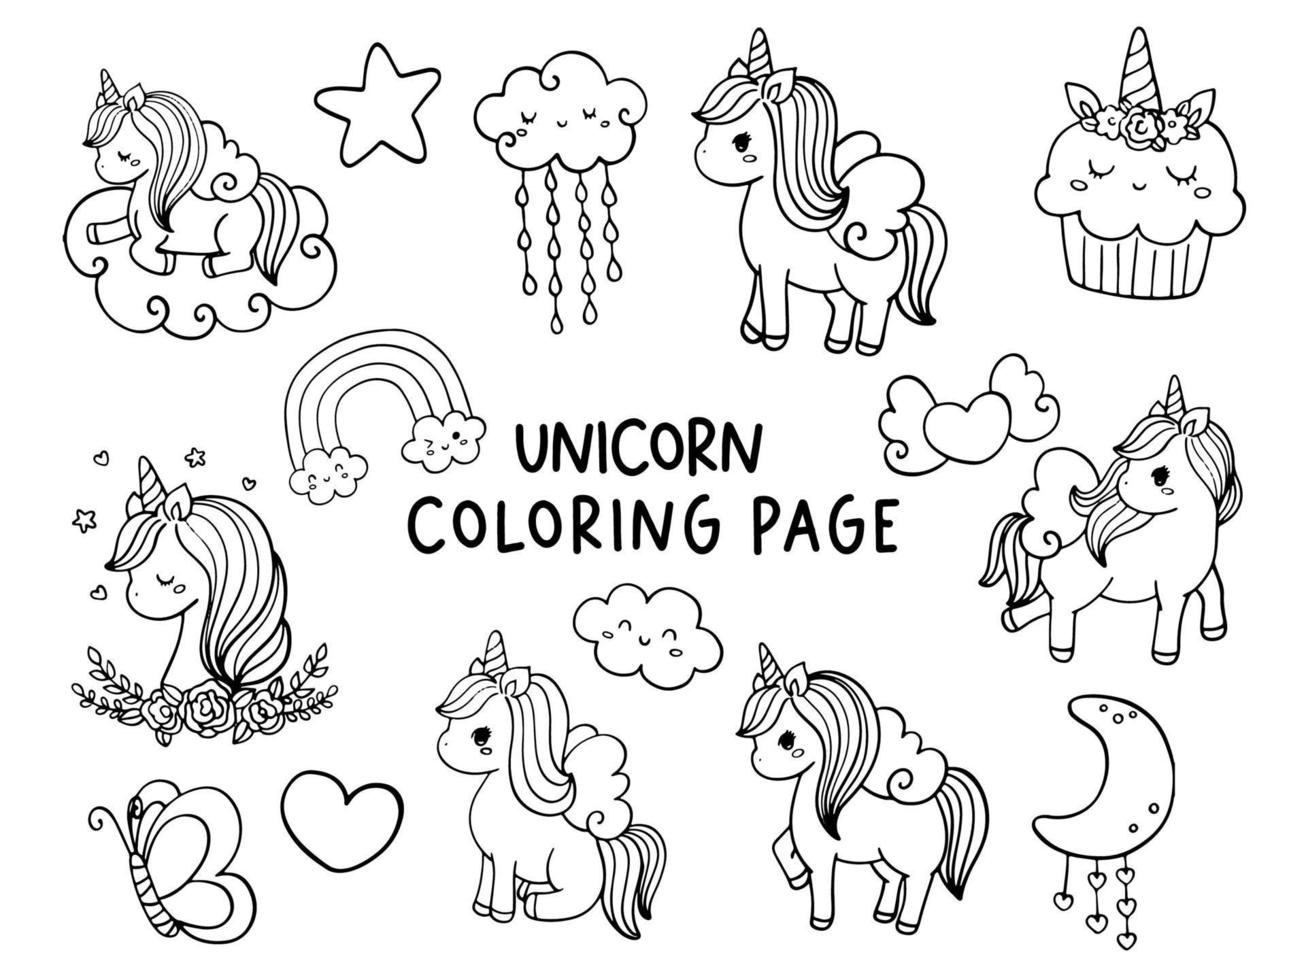 Unicorn coloring page, Unicorn doodle vector illustration